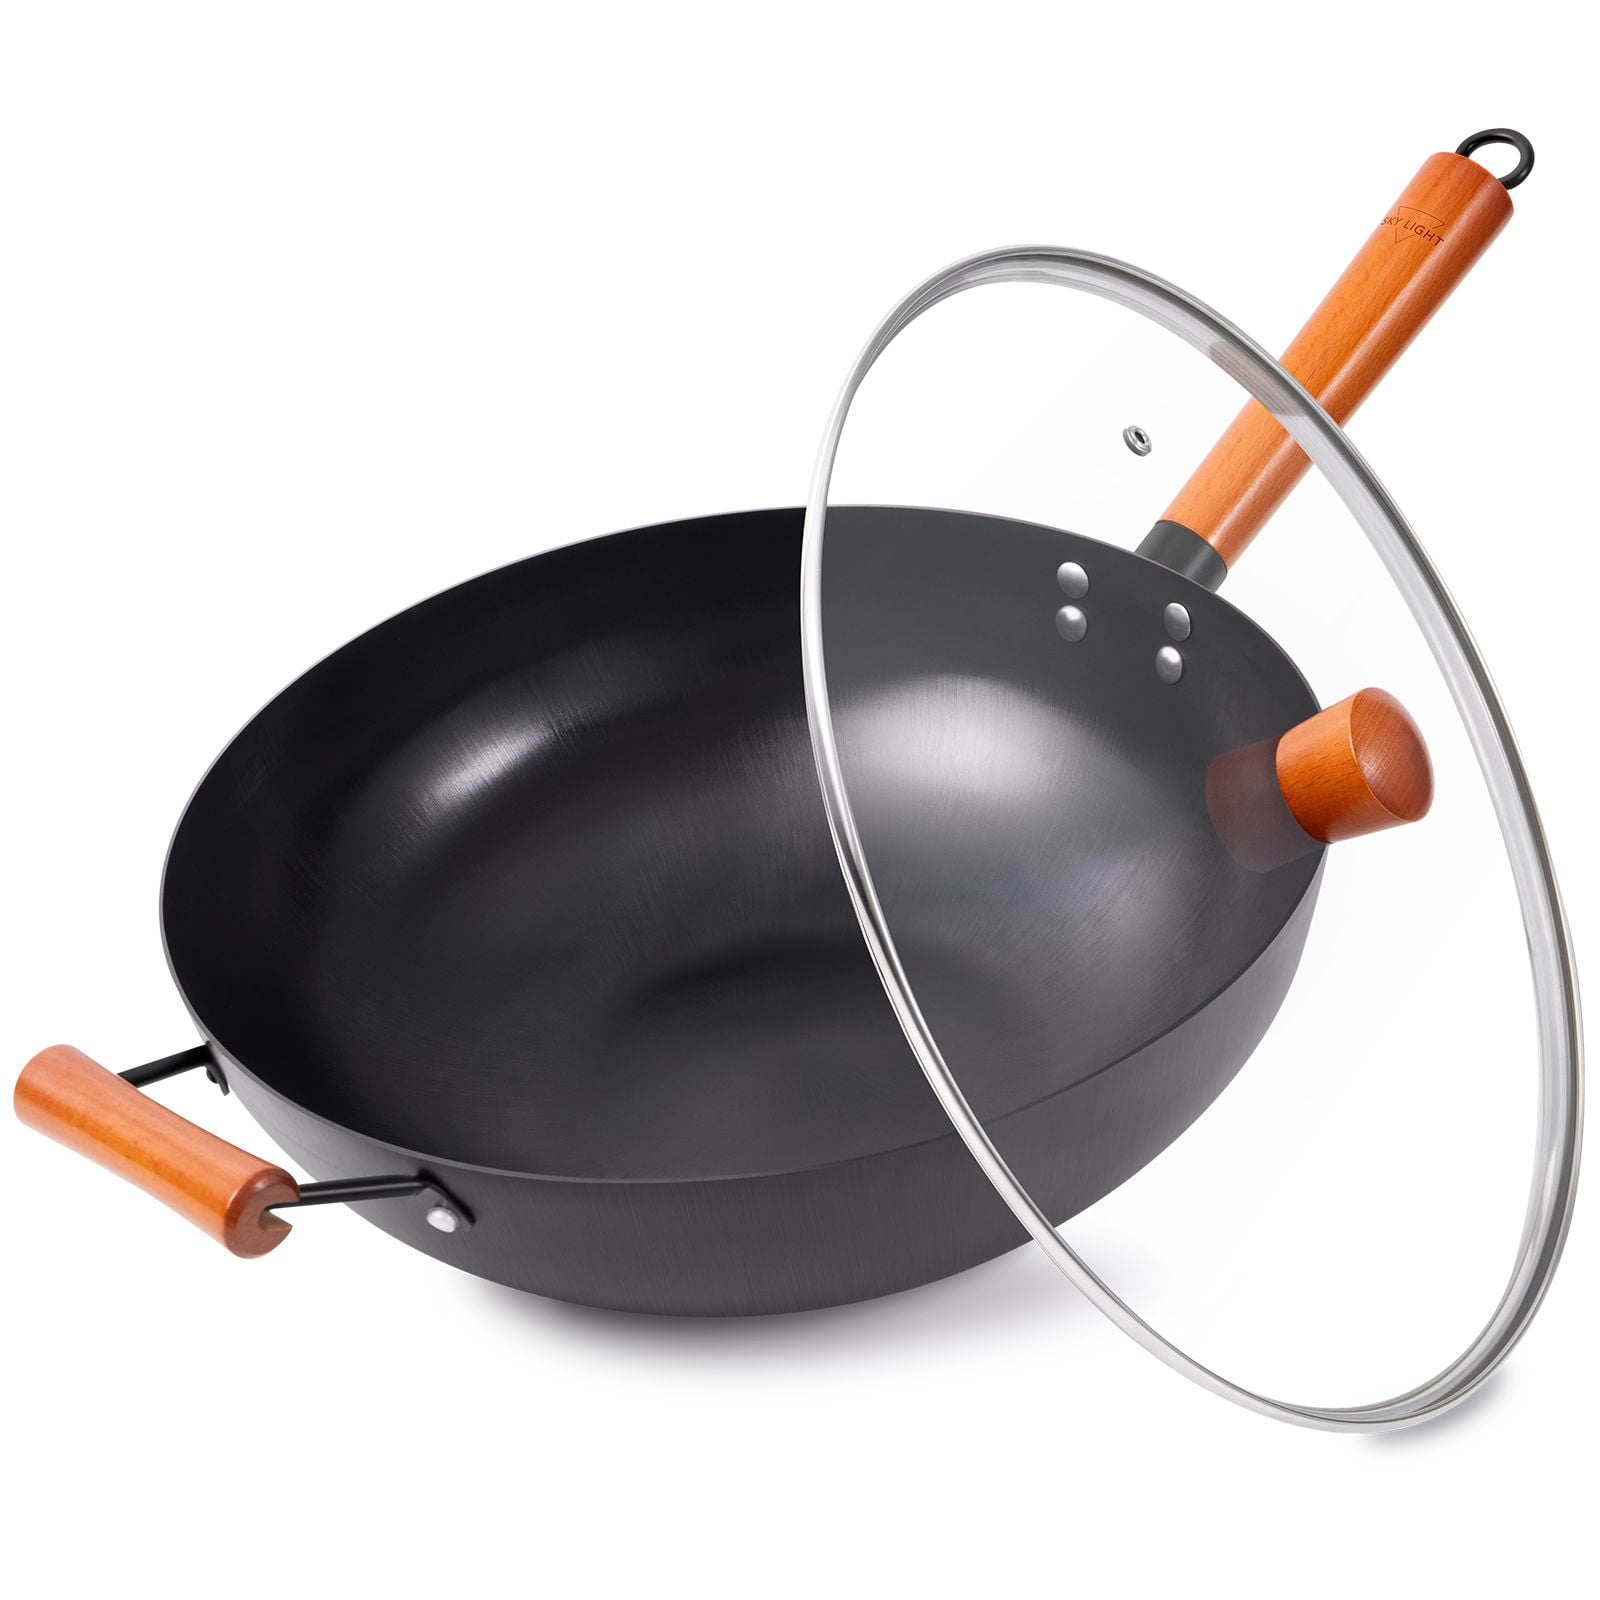 Wok Pan with Lid, SKY LIGHT No Chemical Stir Fry Pan 13.5 inch